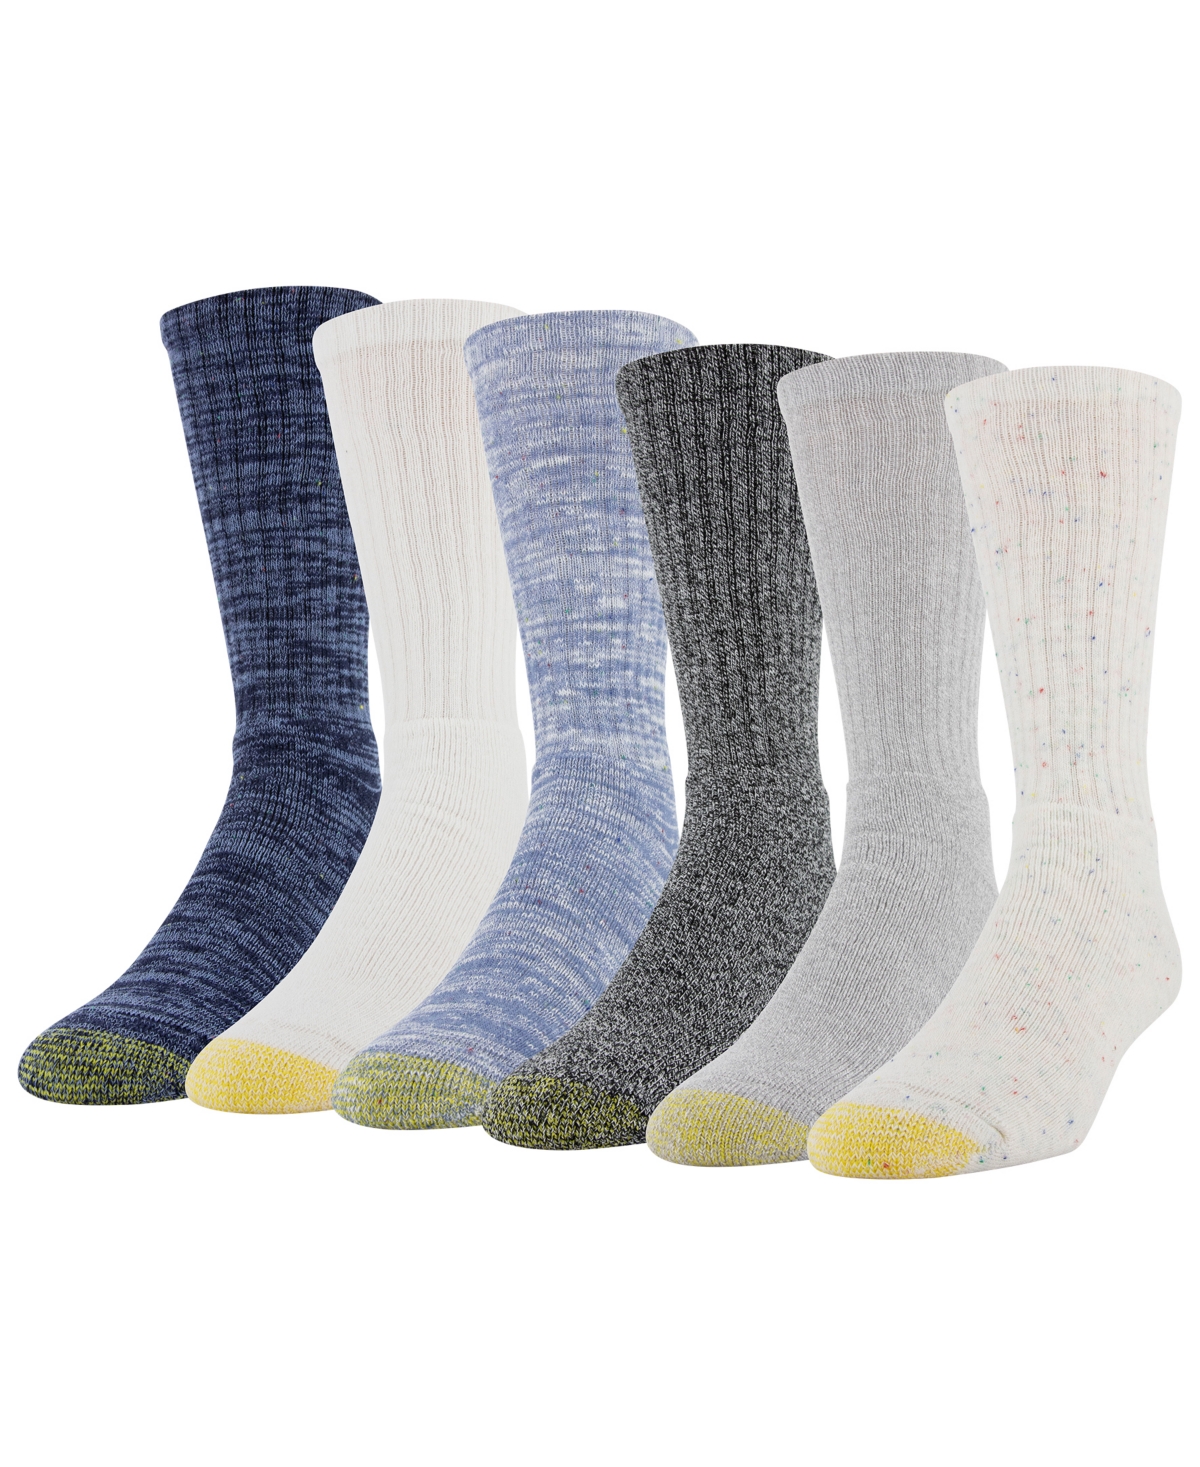 Men's 6-Pack Casual Harrington Socks - Assorted